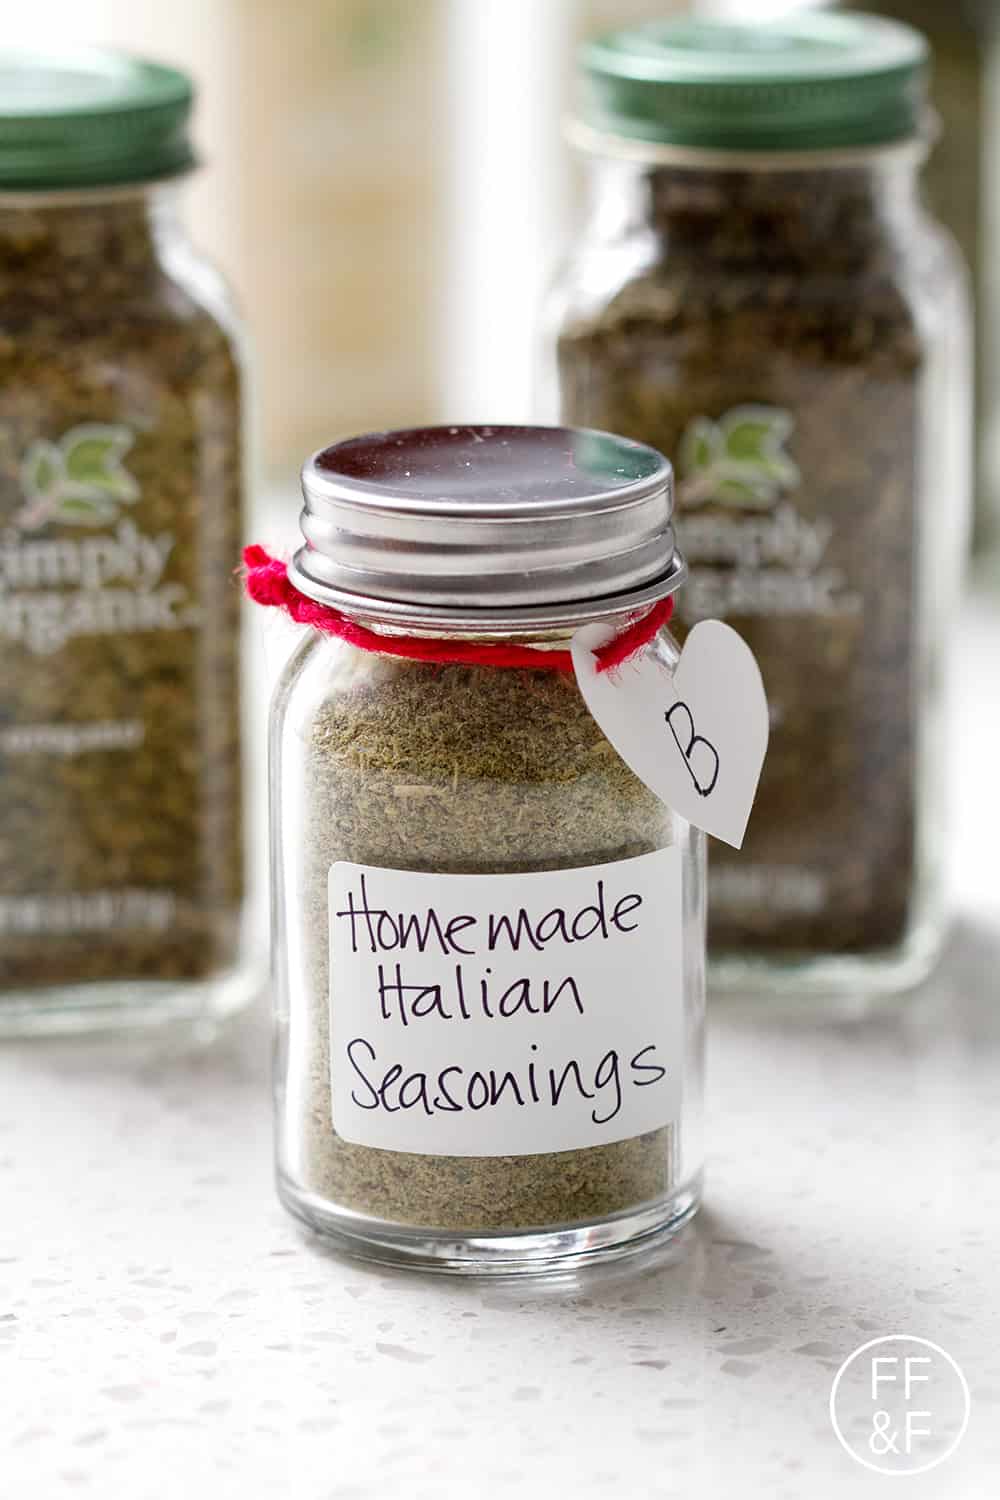 Edible Gift Idea - Make your own custom seasoning blend. Post includes a recipe for Homemade Italian Seasonings